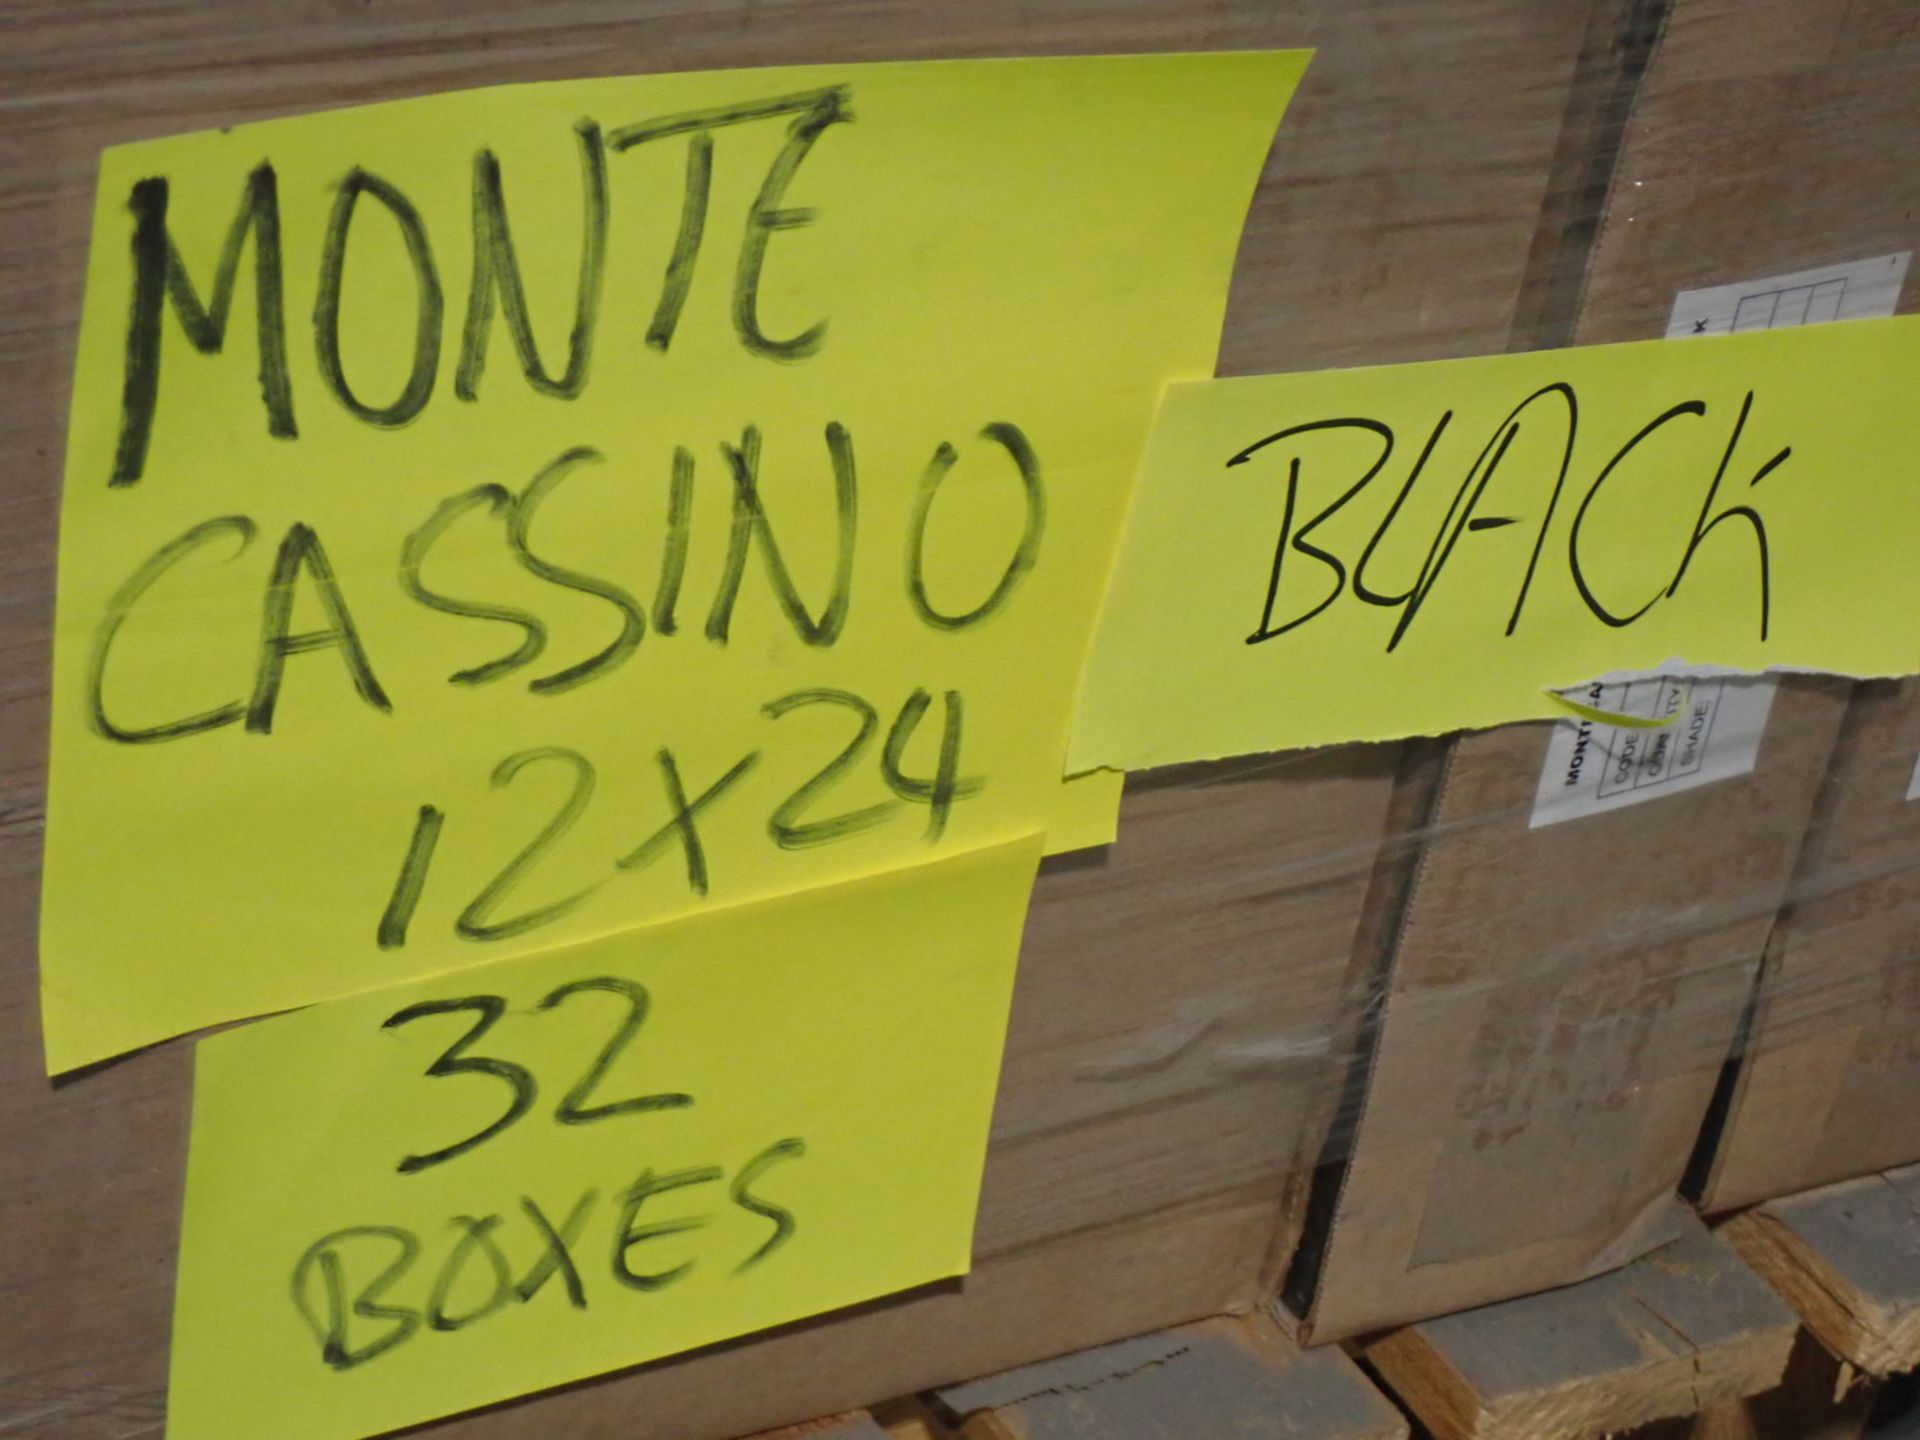 BOXES - MONTE CASINO 12 X 24 TILES (8 PCS/BOX) (2 SKIDS) - Image 3 of 6